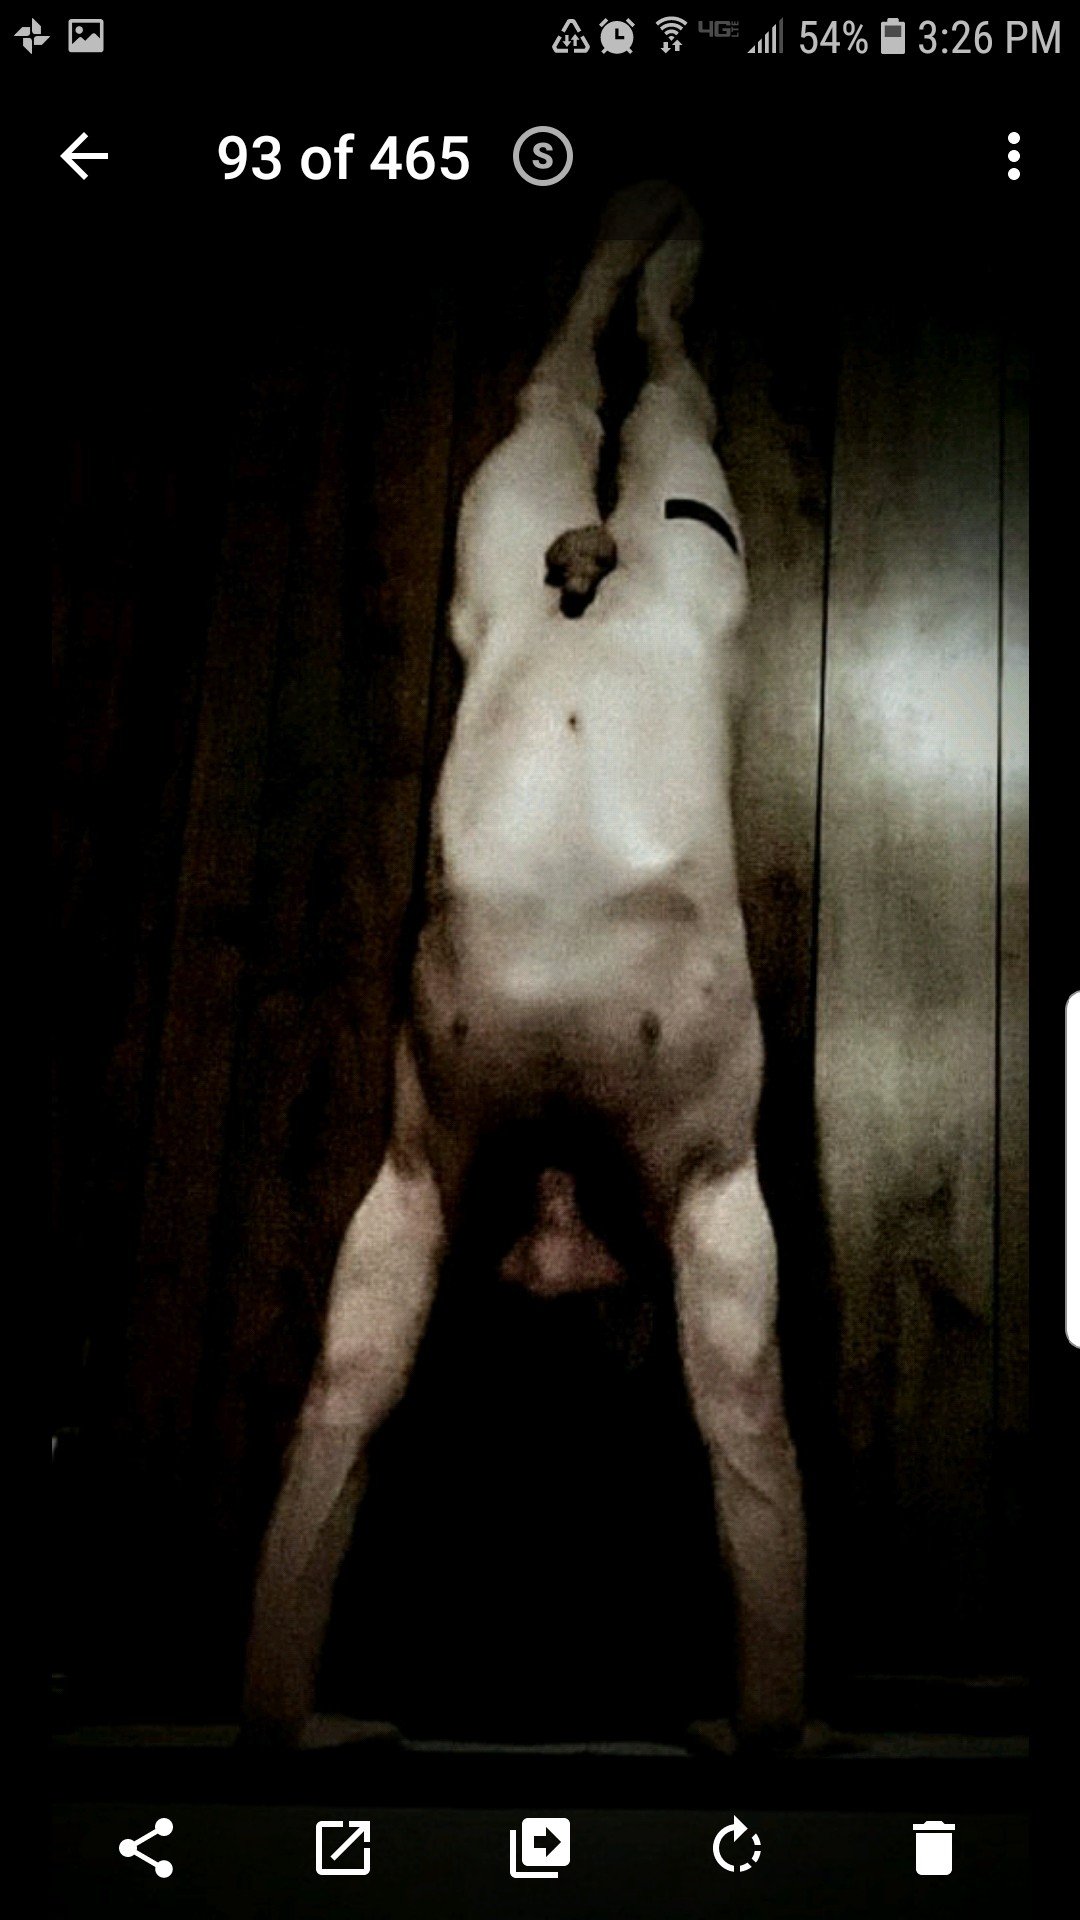 Photo by ArtOfNakedYoga with the username @ArtOfNakedYoga, who is a verified user,  December 10, 2018 at 9:27 PM and the text says '#yoga #me #nudeyoga #nakedyoga #handstand'